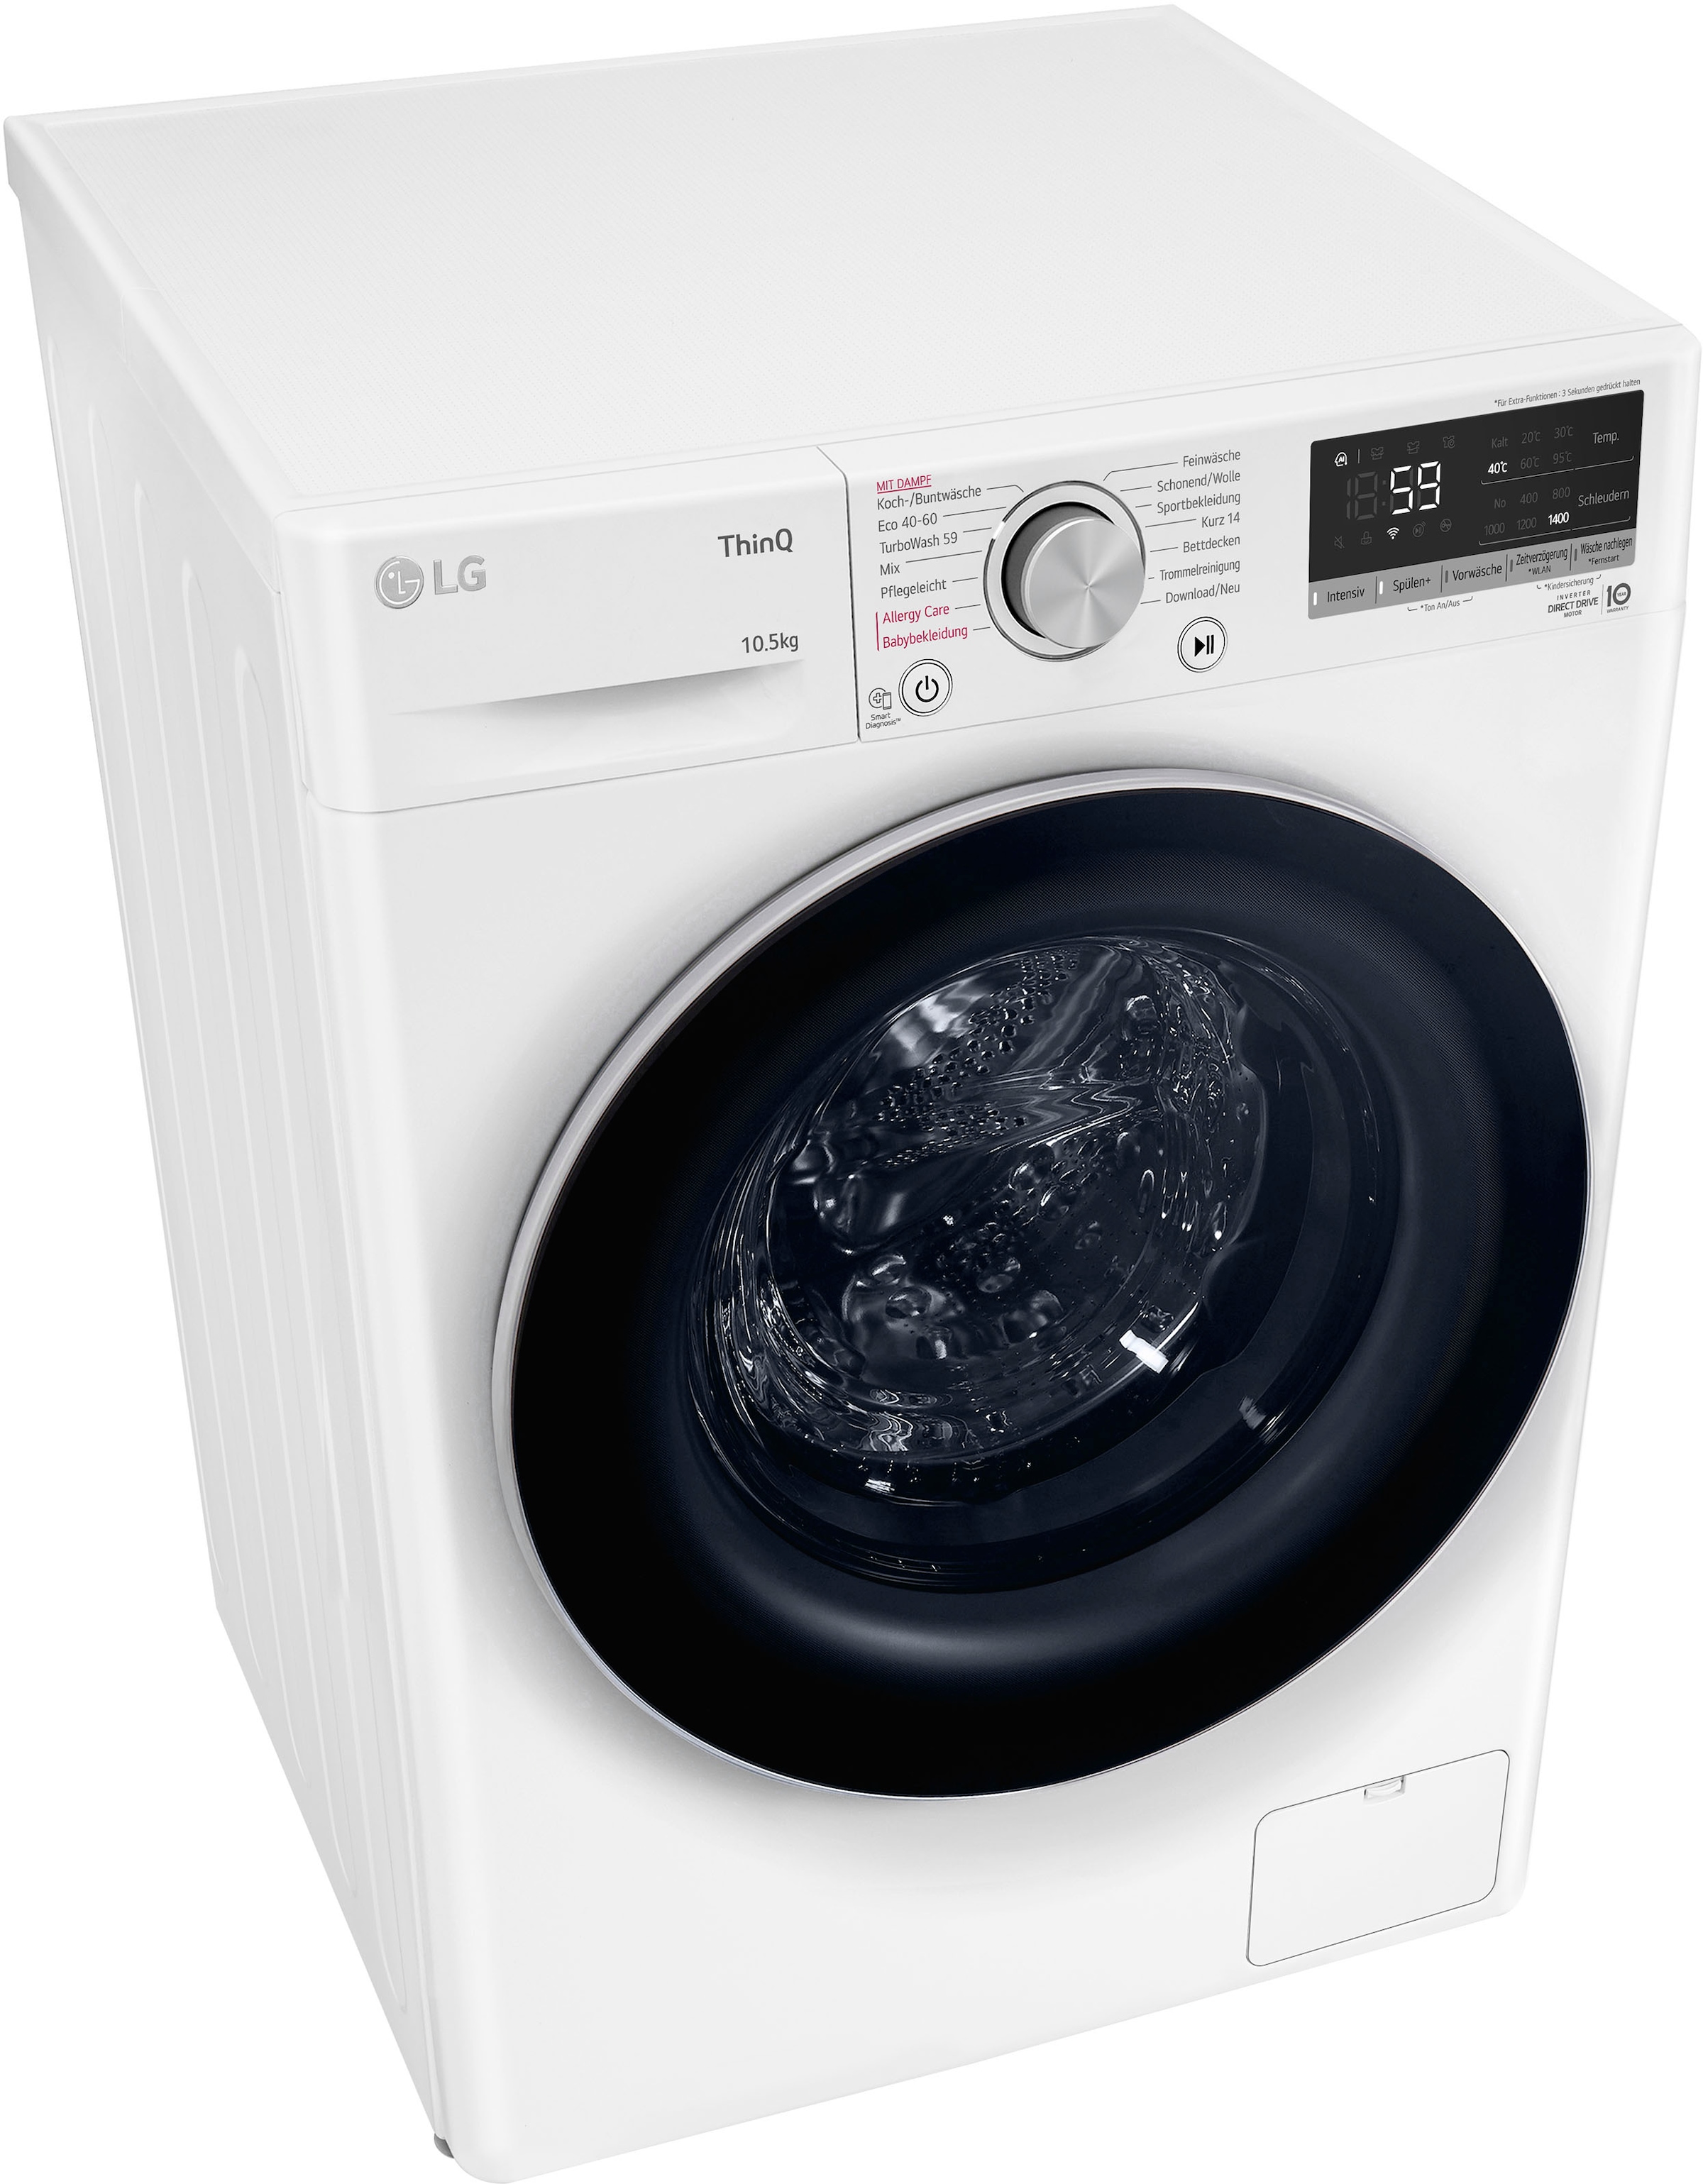 kg, »F4WV70X1«, LG bestellen Waschmaschine U/min 10,5 1400 F4WV70X1,